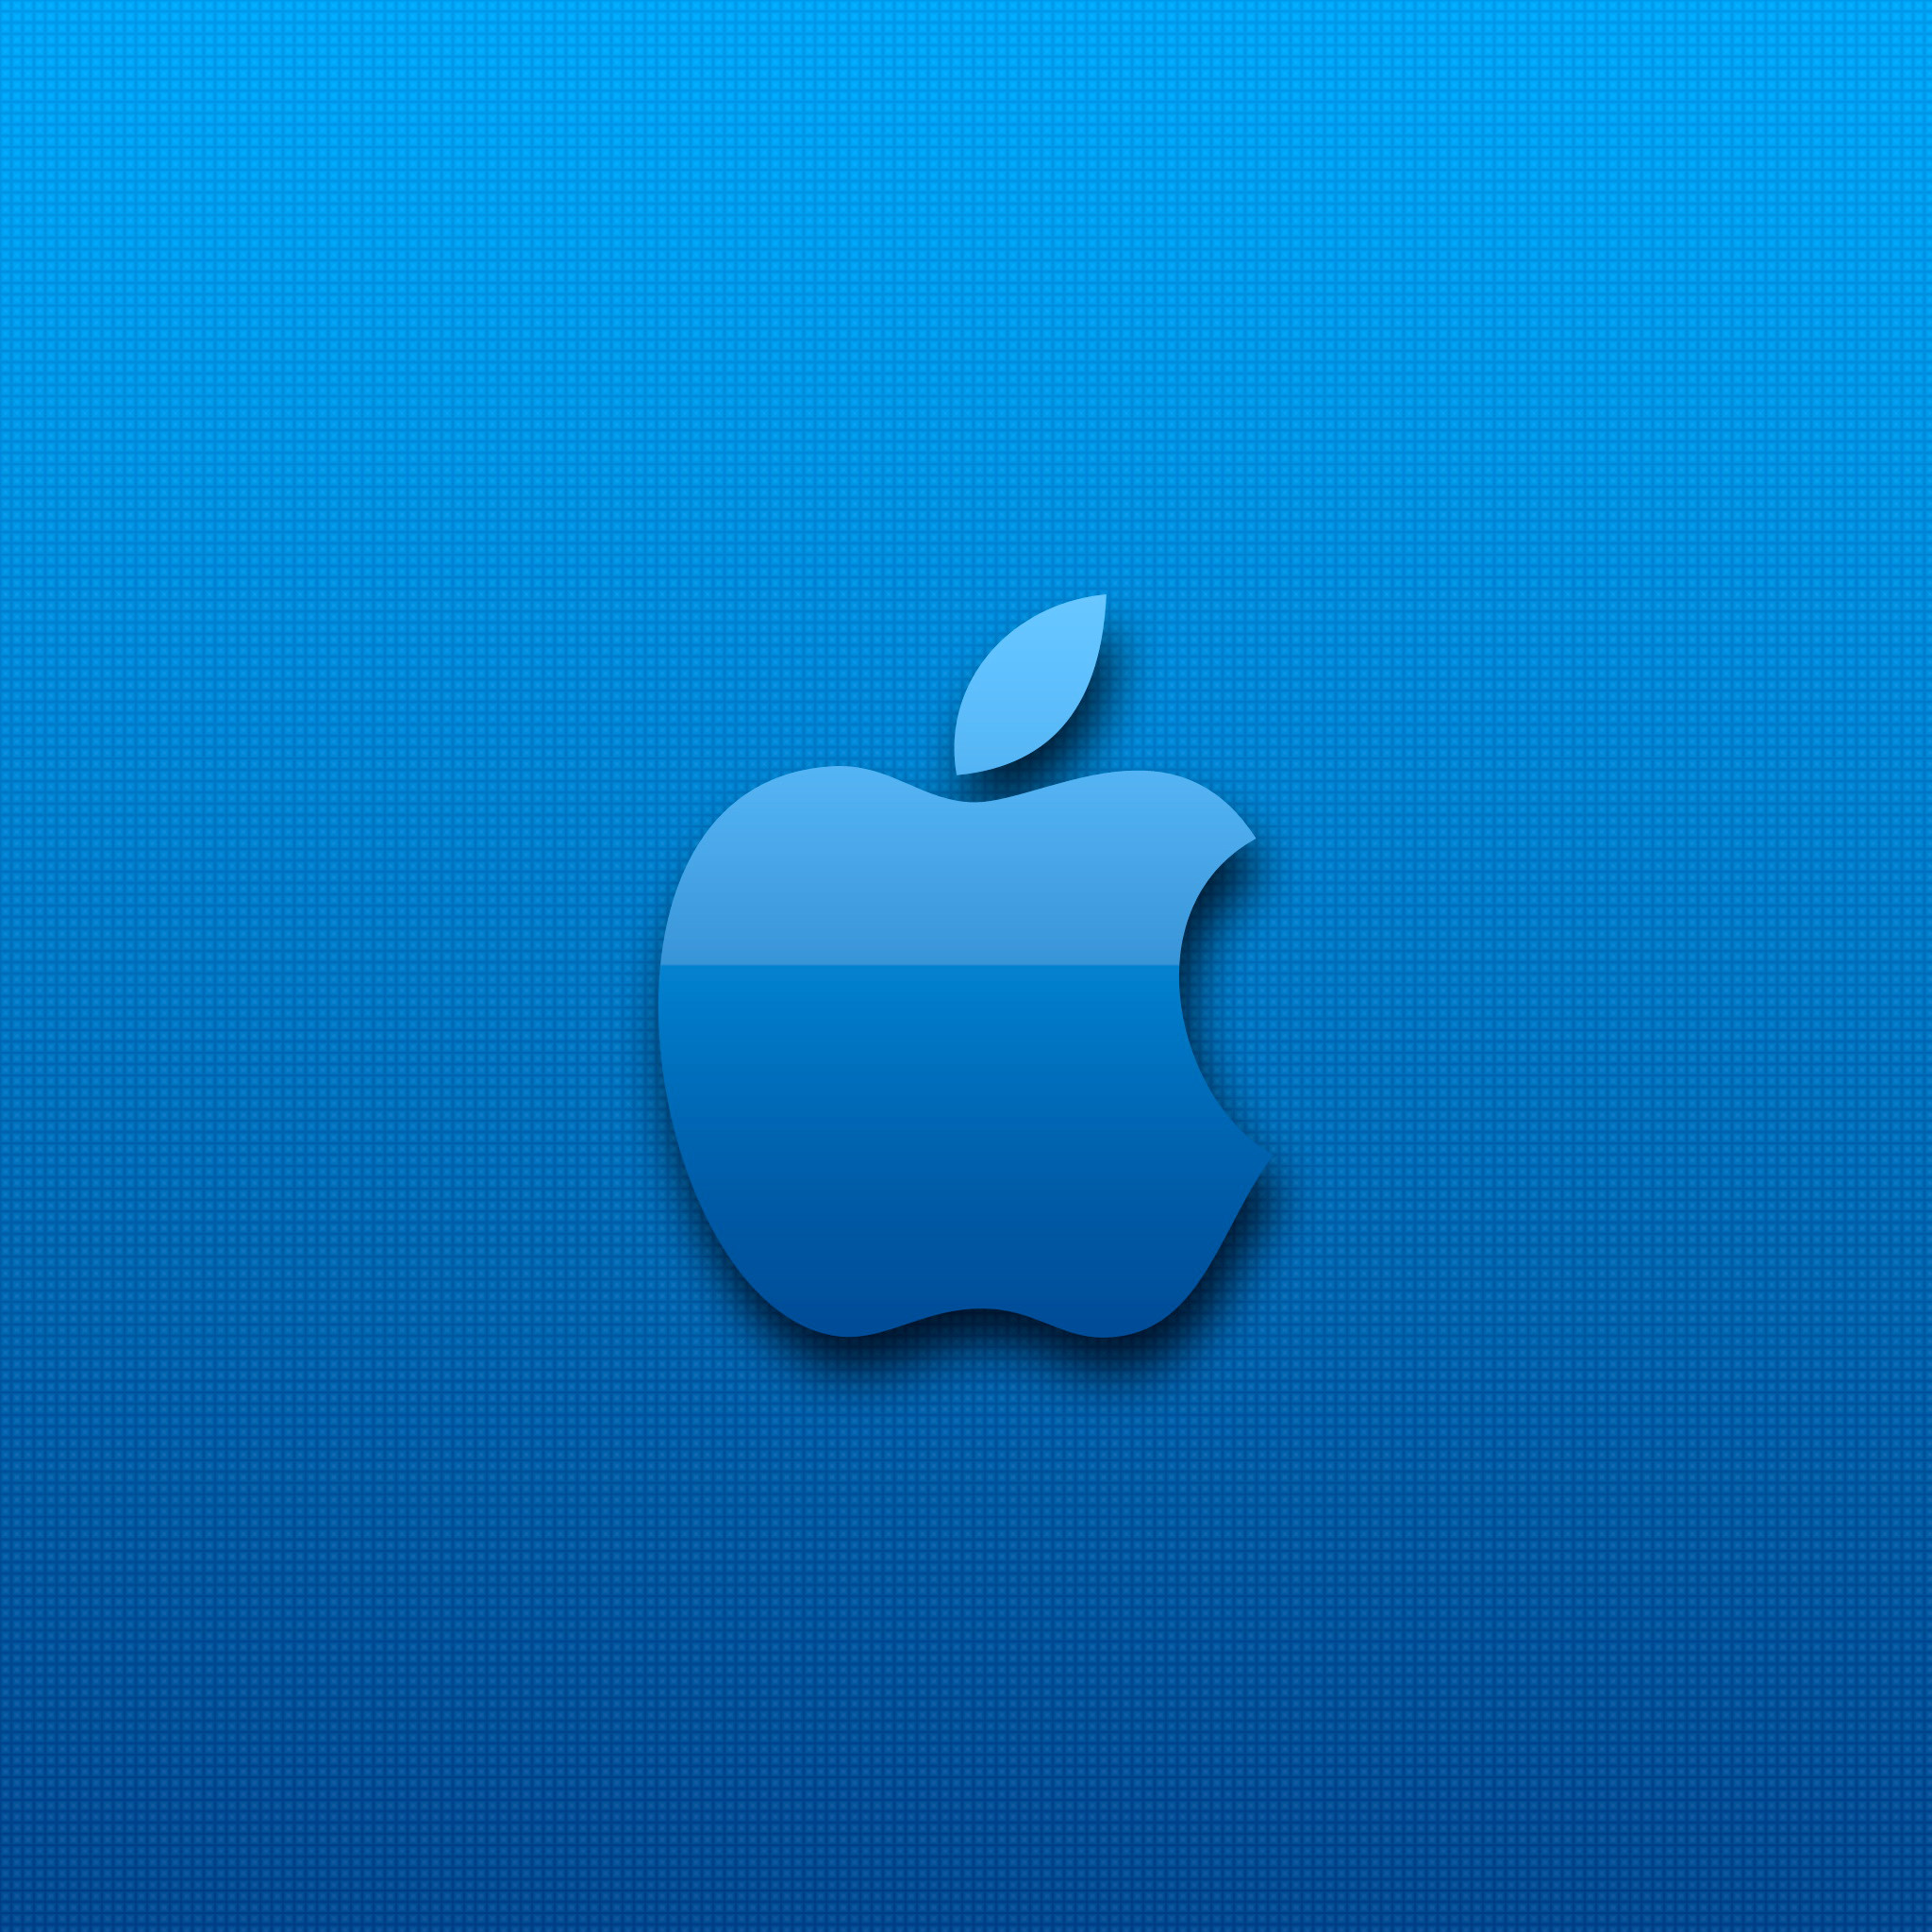 2048x2048 Blue-Apple-3Wallpapers-iPad-Retina